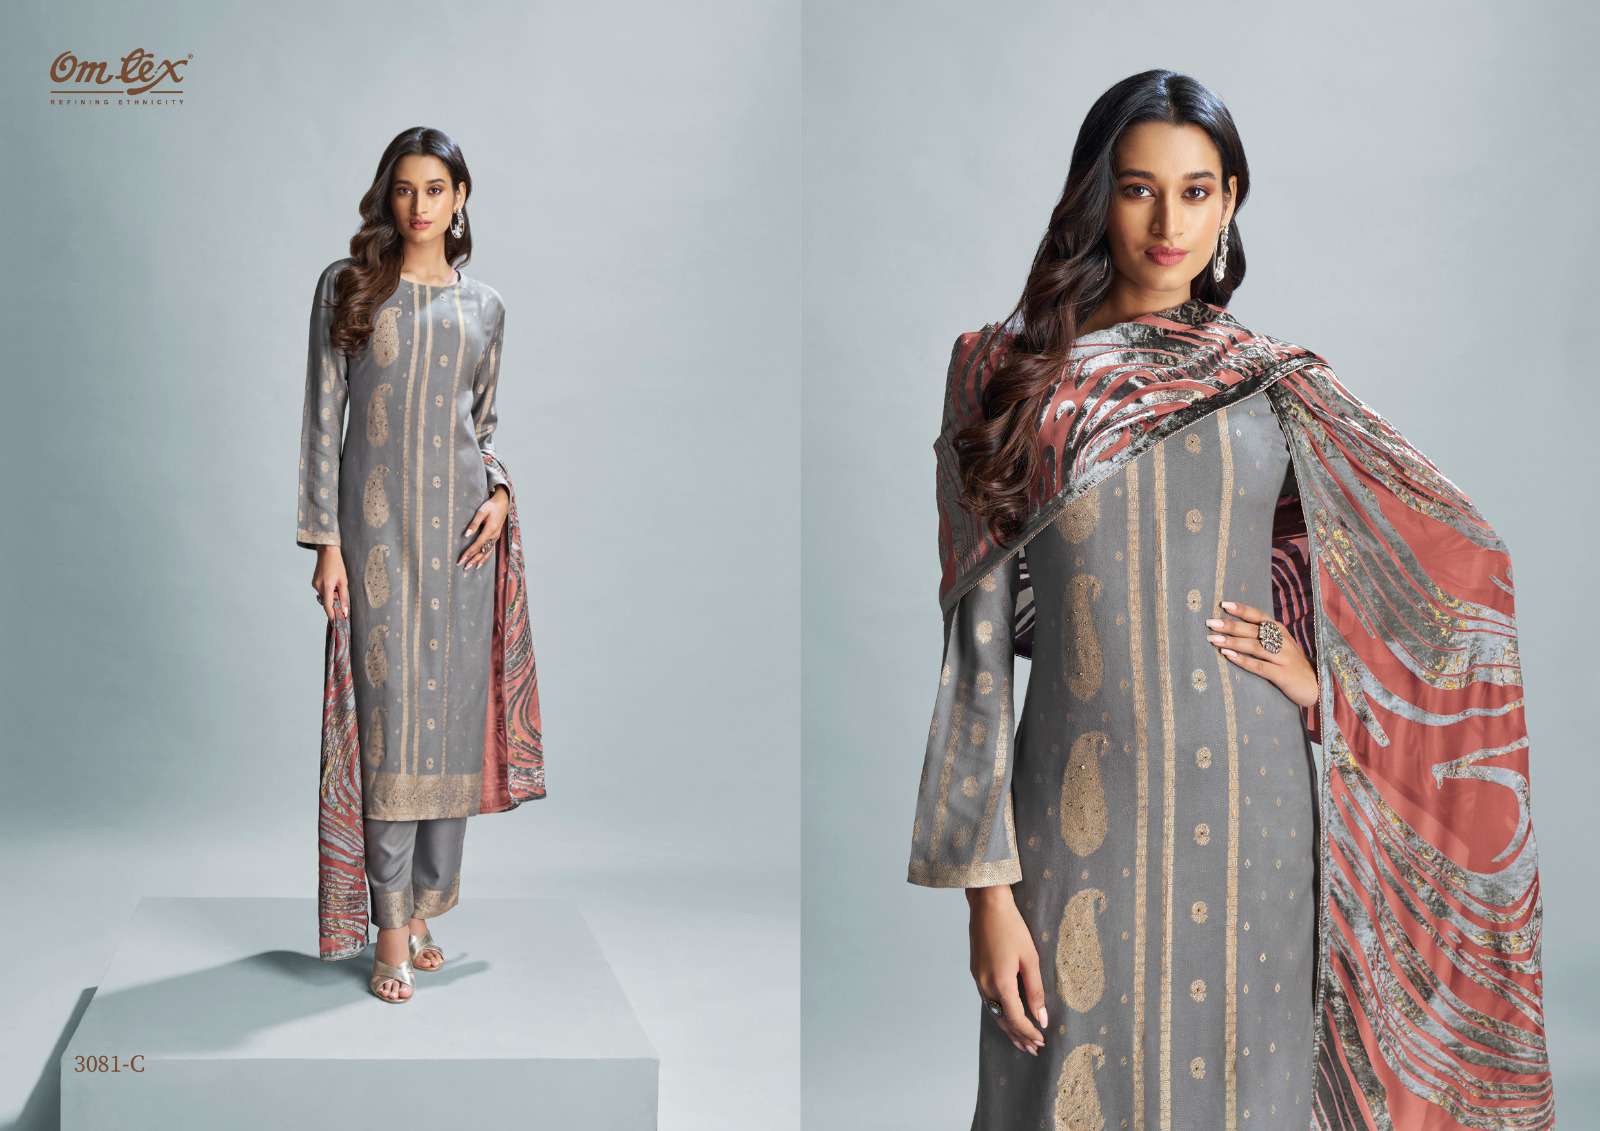 omtex shimmera 3081 colours wedding wear pakistani designer suit wholesaler surat gujarat